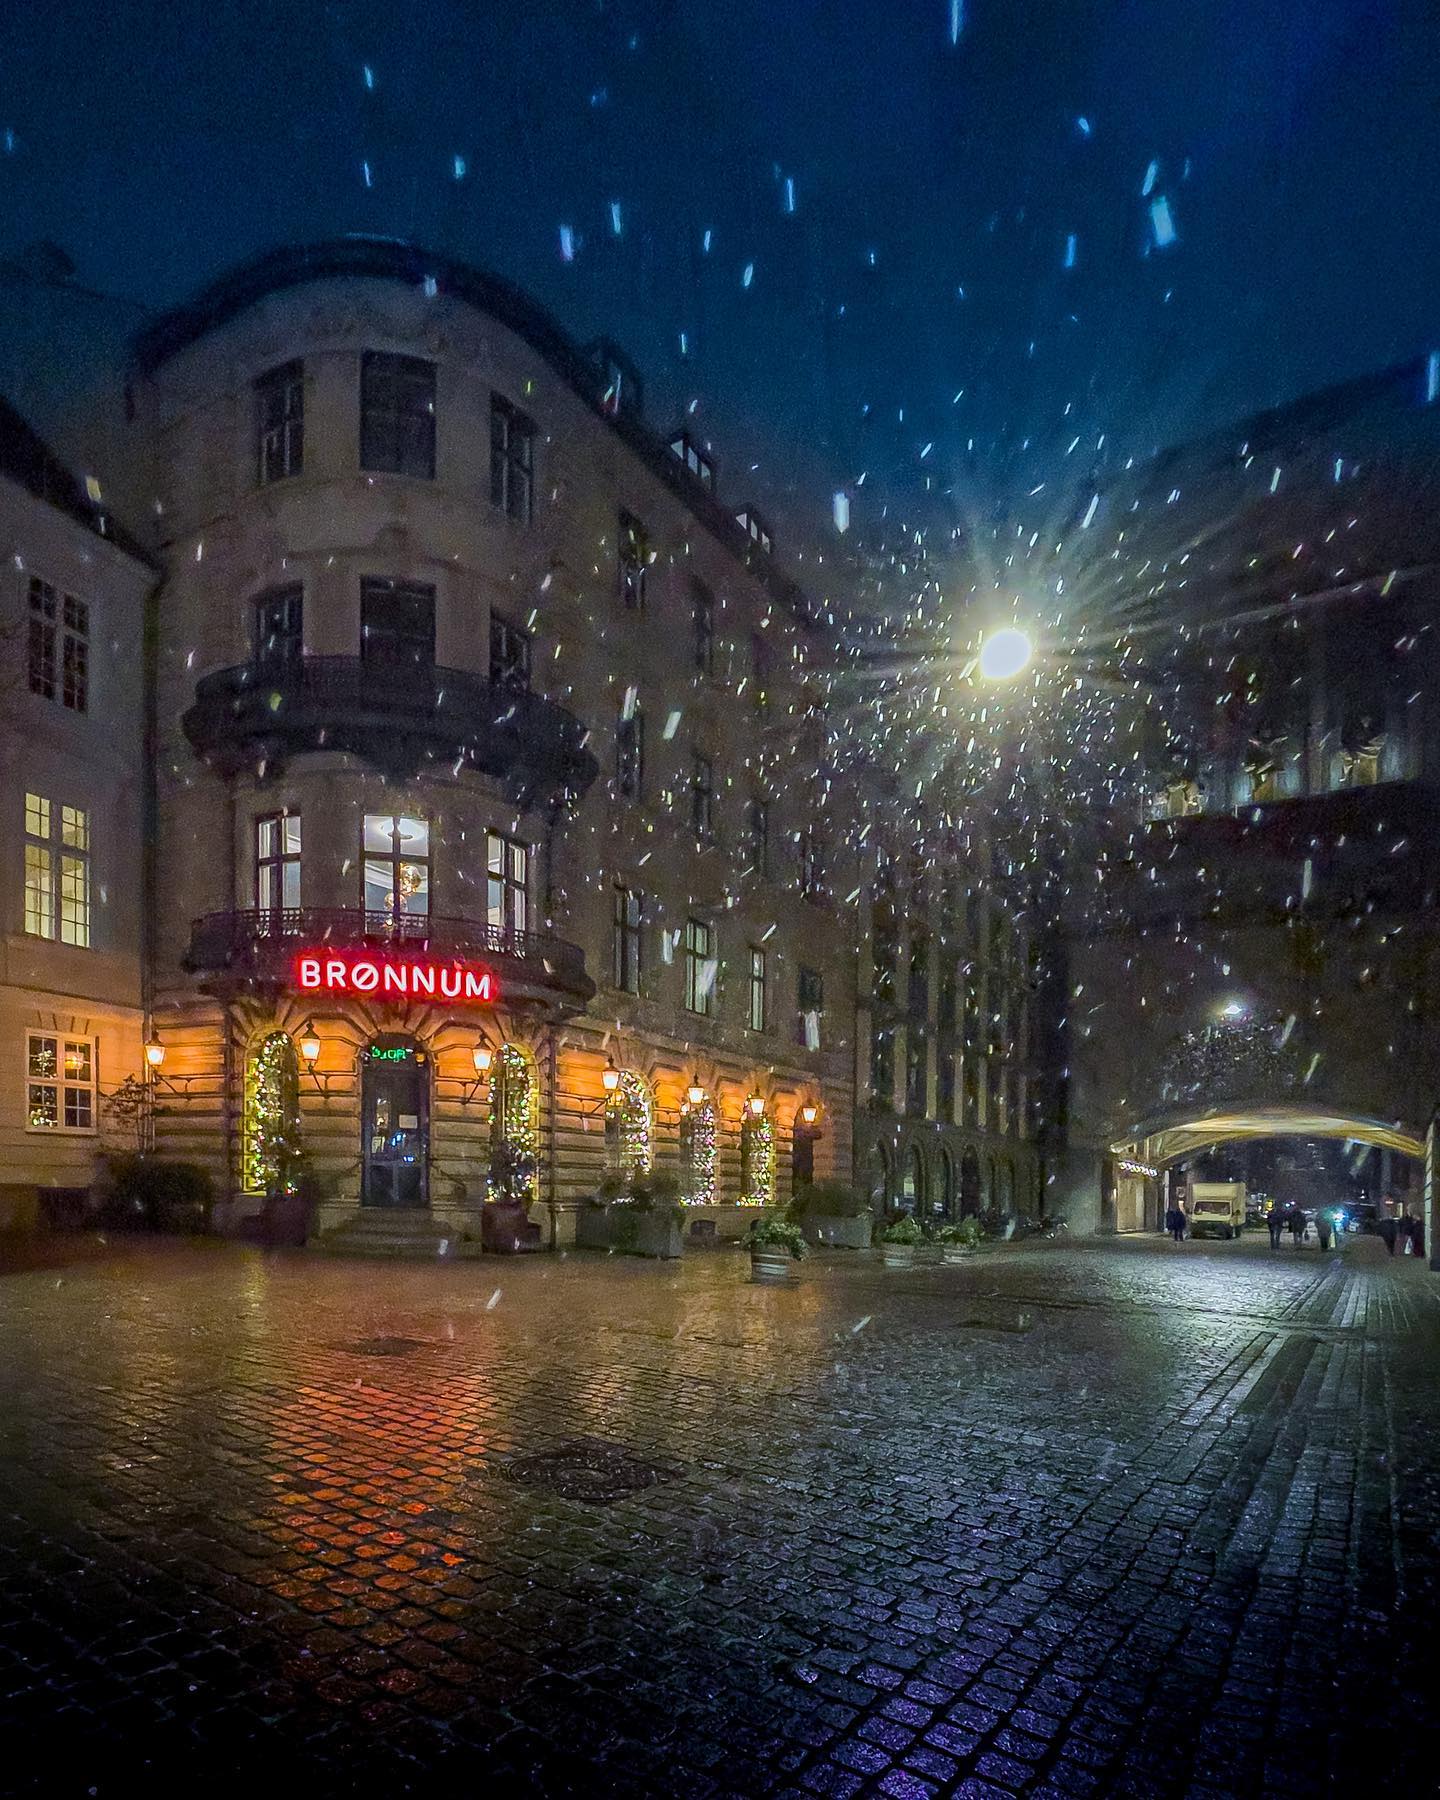 Copenhagen Christmas mood 🎄💫🎉 #copenhagenbible #visitdenmark #ig_mood #ourmoodydays #sharingcph #mood_family  #MoodyGrams #igersdk  #ig_mood  #ig_worldclub #igworldclub  #urbanromantix #visitcopenhagen  #vzcomood  #voreskbh #mitkbh #tilbyen #copenhagenheat #megaphotographers #cozycopenhagen #bestcopenhagen
#tilbyen #ibyen #aokdk 
#ibyen #opdagdanmark #shotoniphone #copenhagenheat